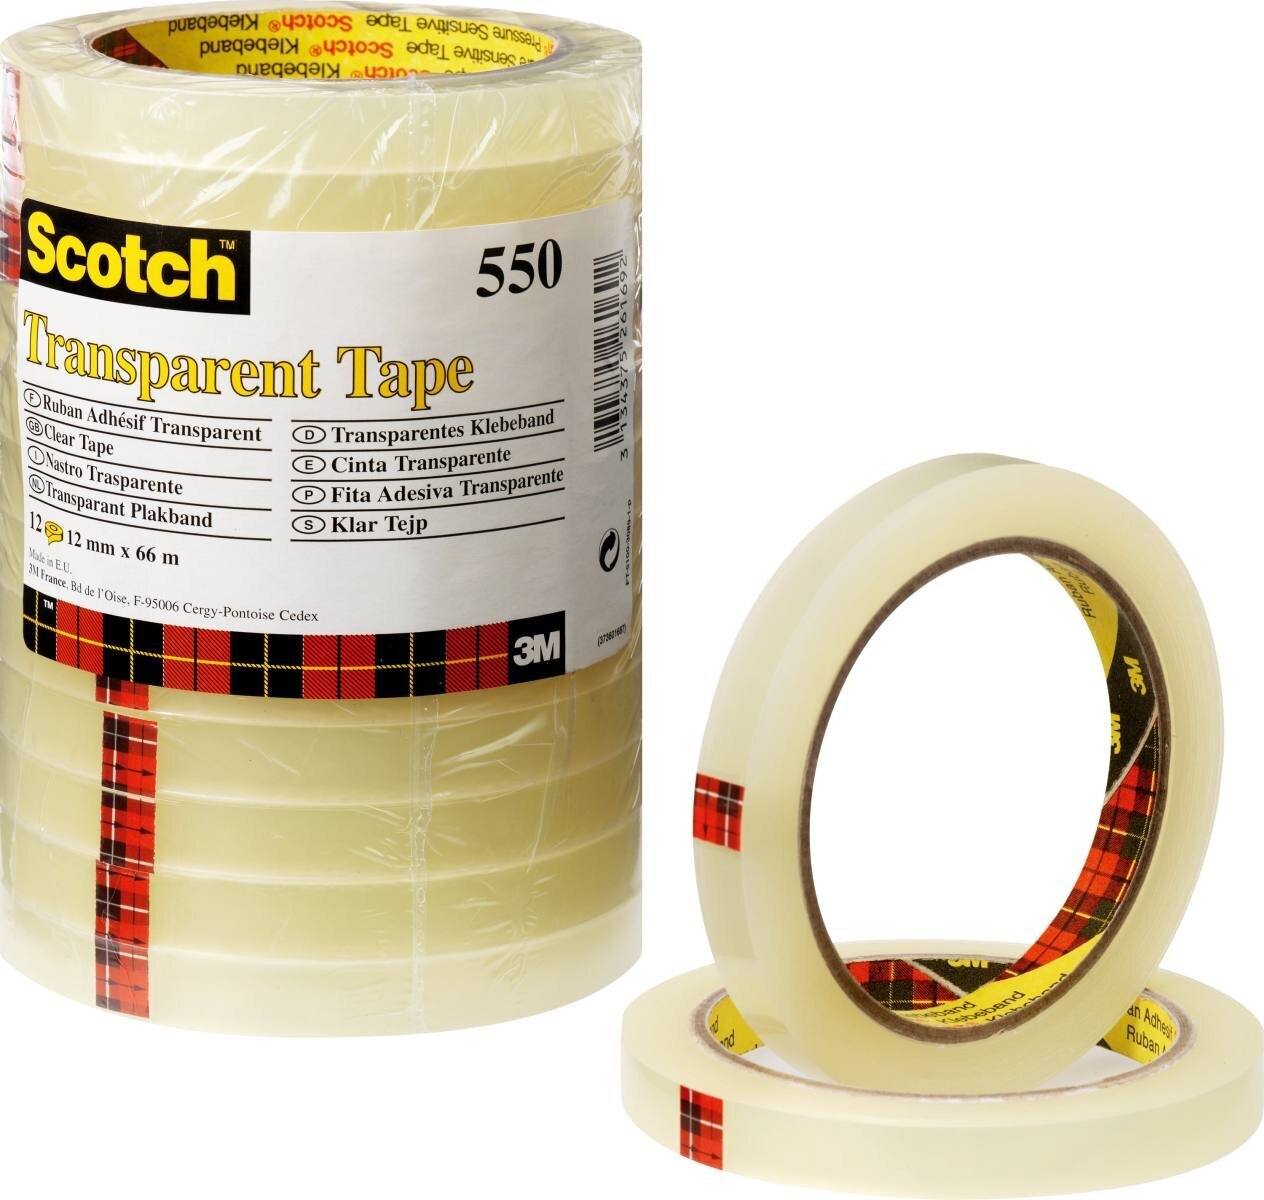 3M Scotch transparentes Klebeband 550, 19 mm x 66 m, transparent, Pack 8 Rollen